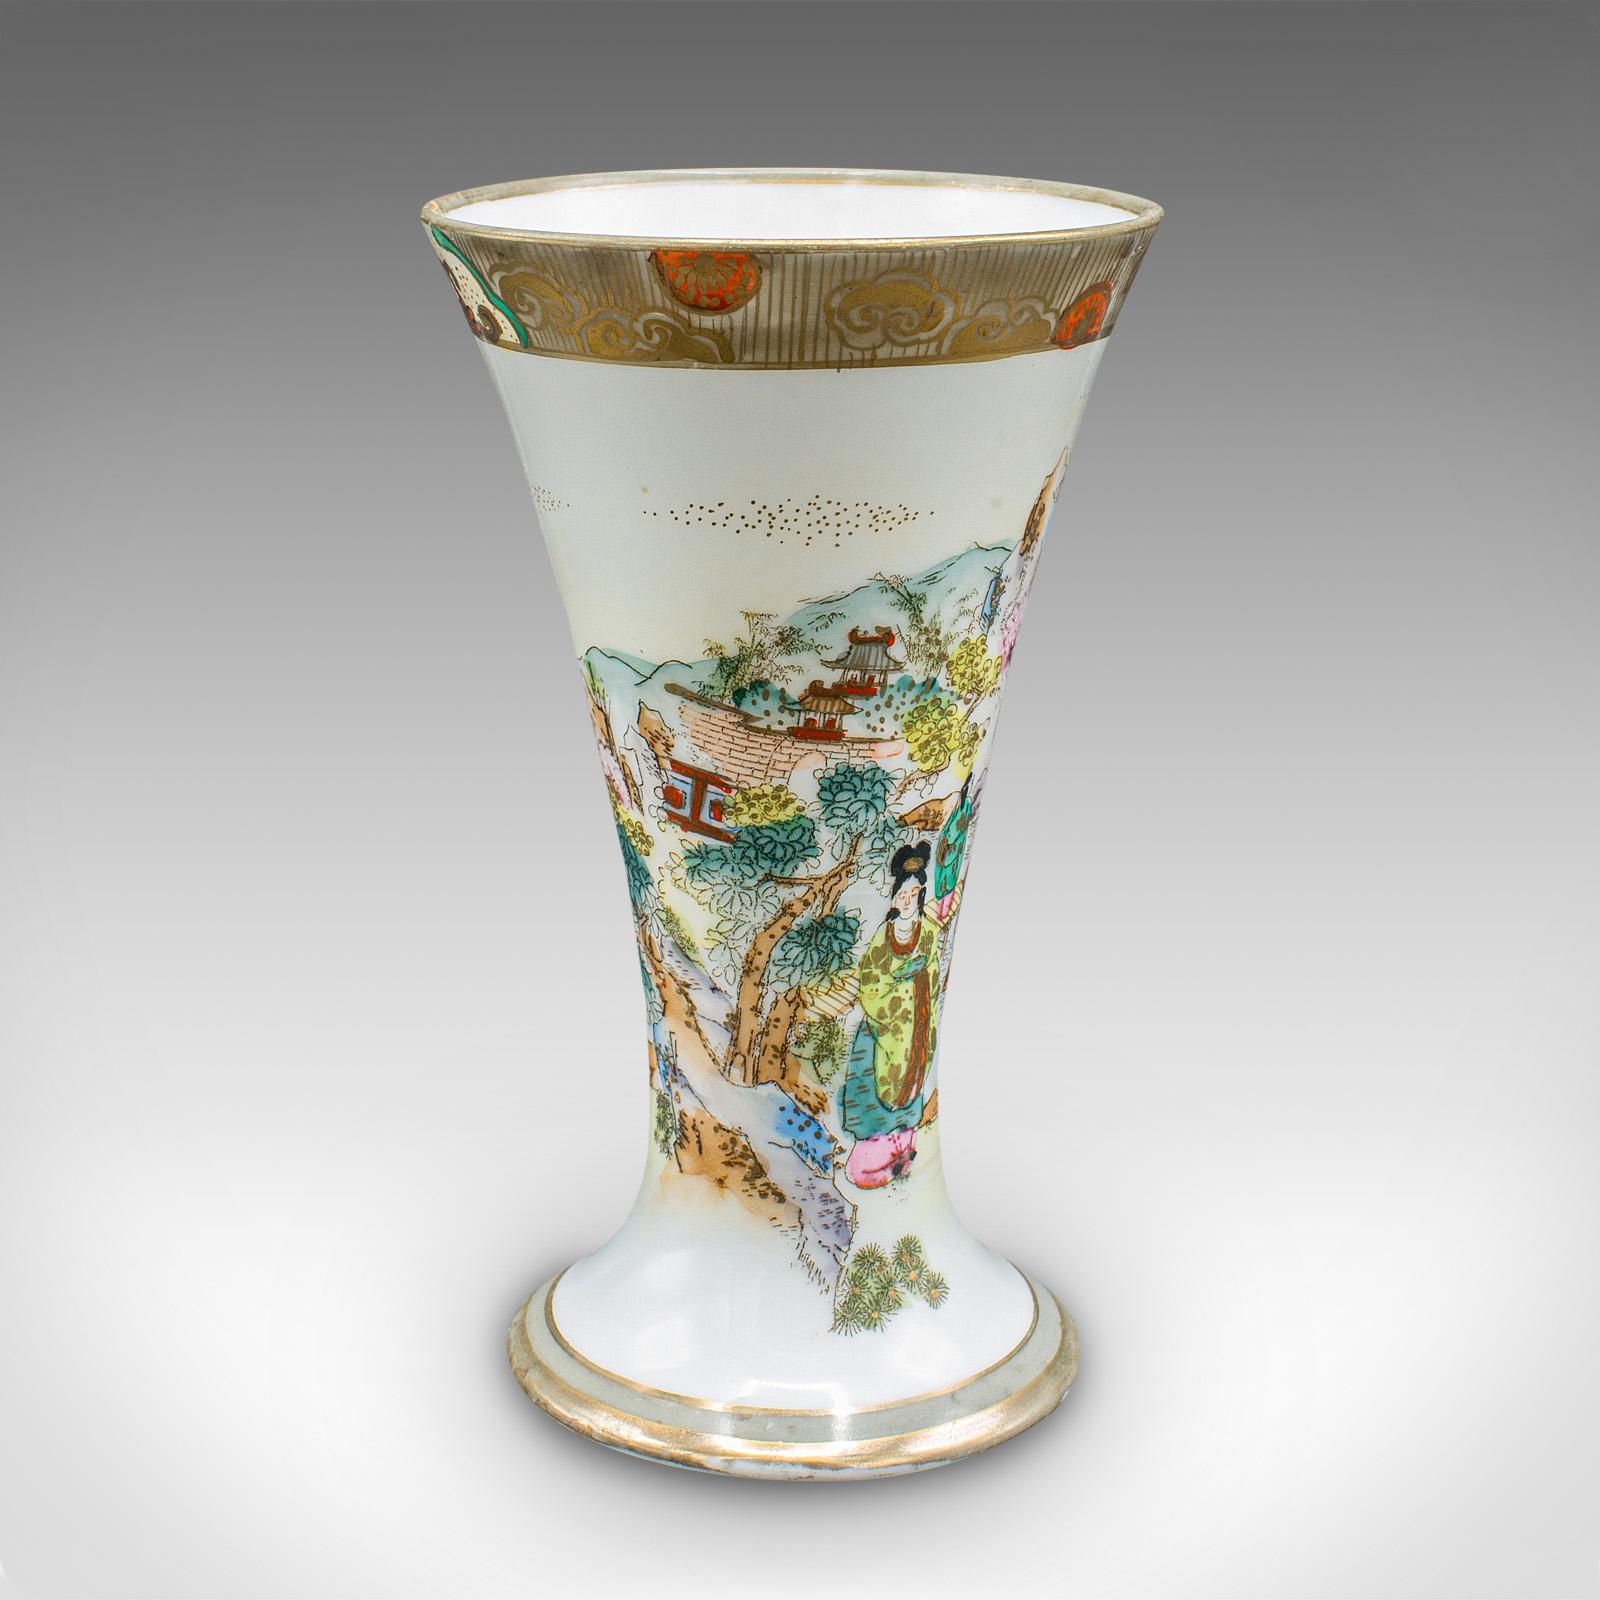 Pair Of Vintage Decorative Flower Vases, Japanese, Ceramic, Noritake, Art Deco In Good Condition For Sale In Hele, Devon, GB